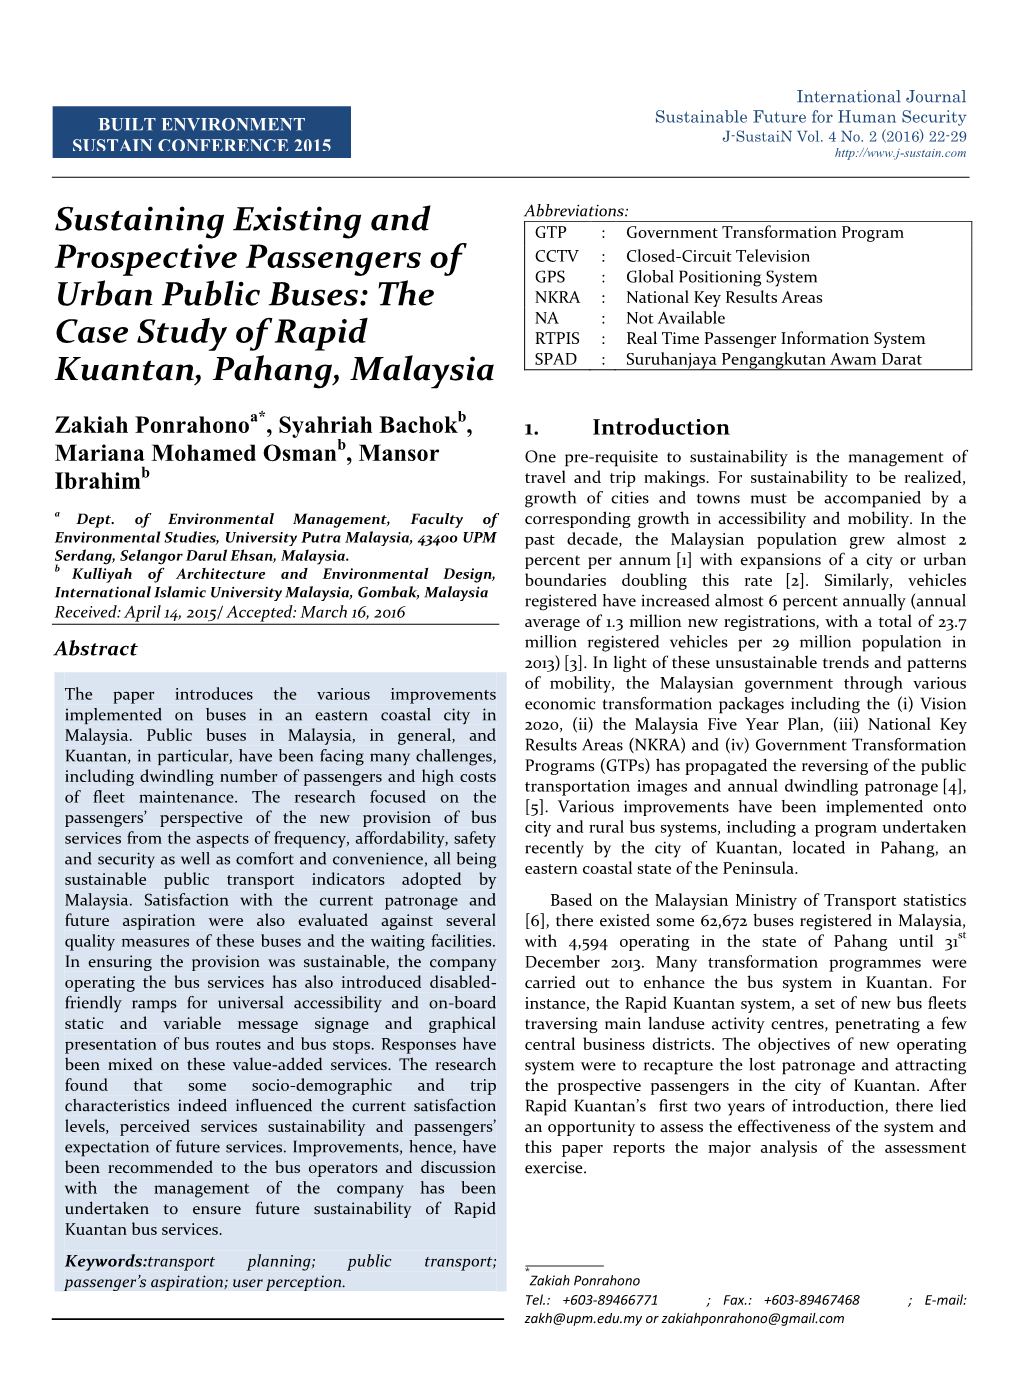 The Case Study of Rapid Kuantan, Pahang, Malaysia